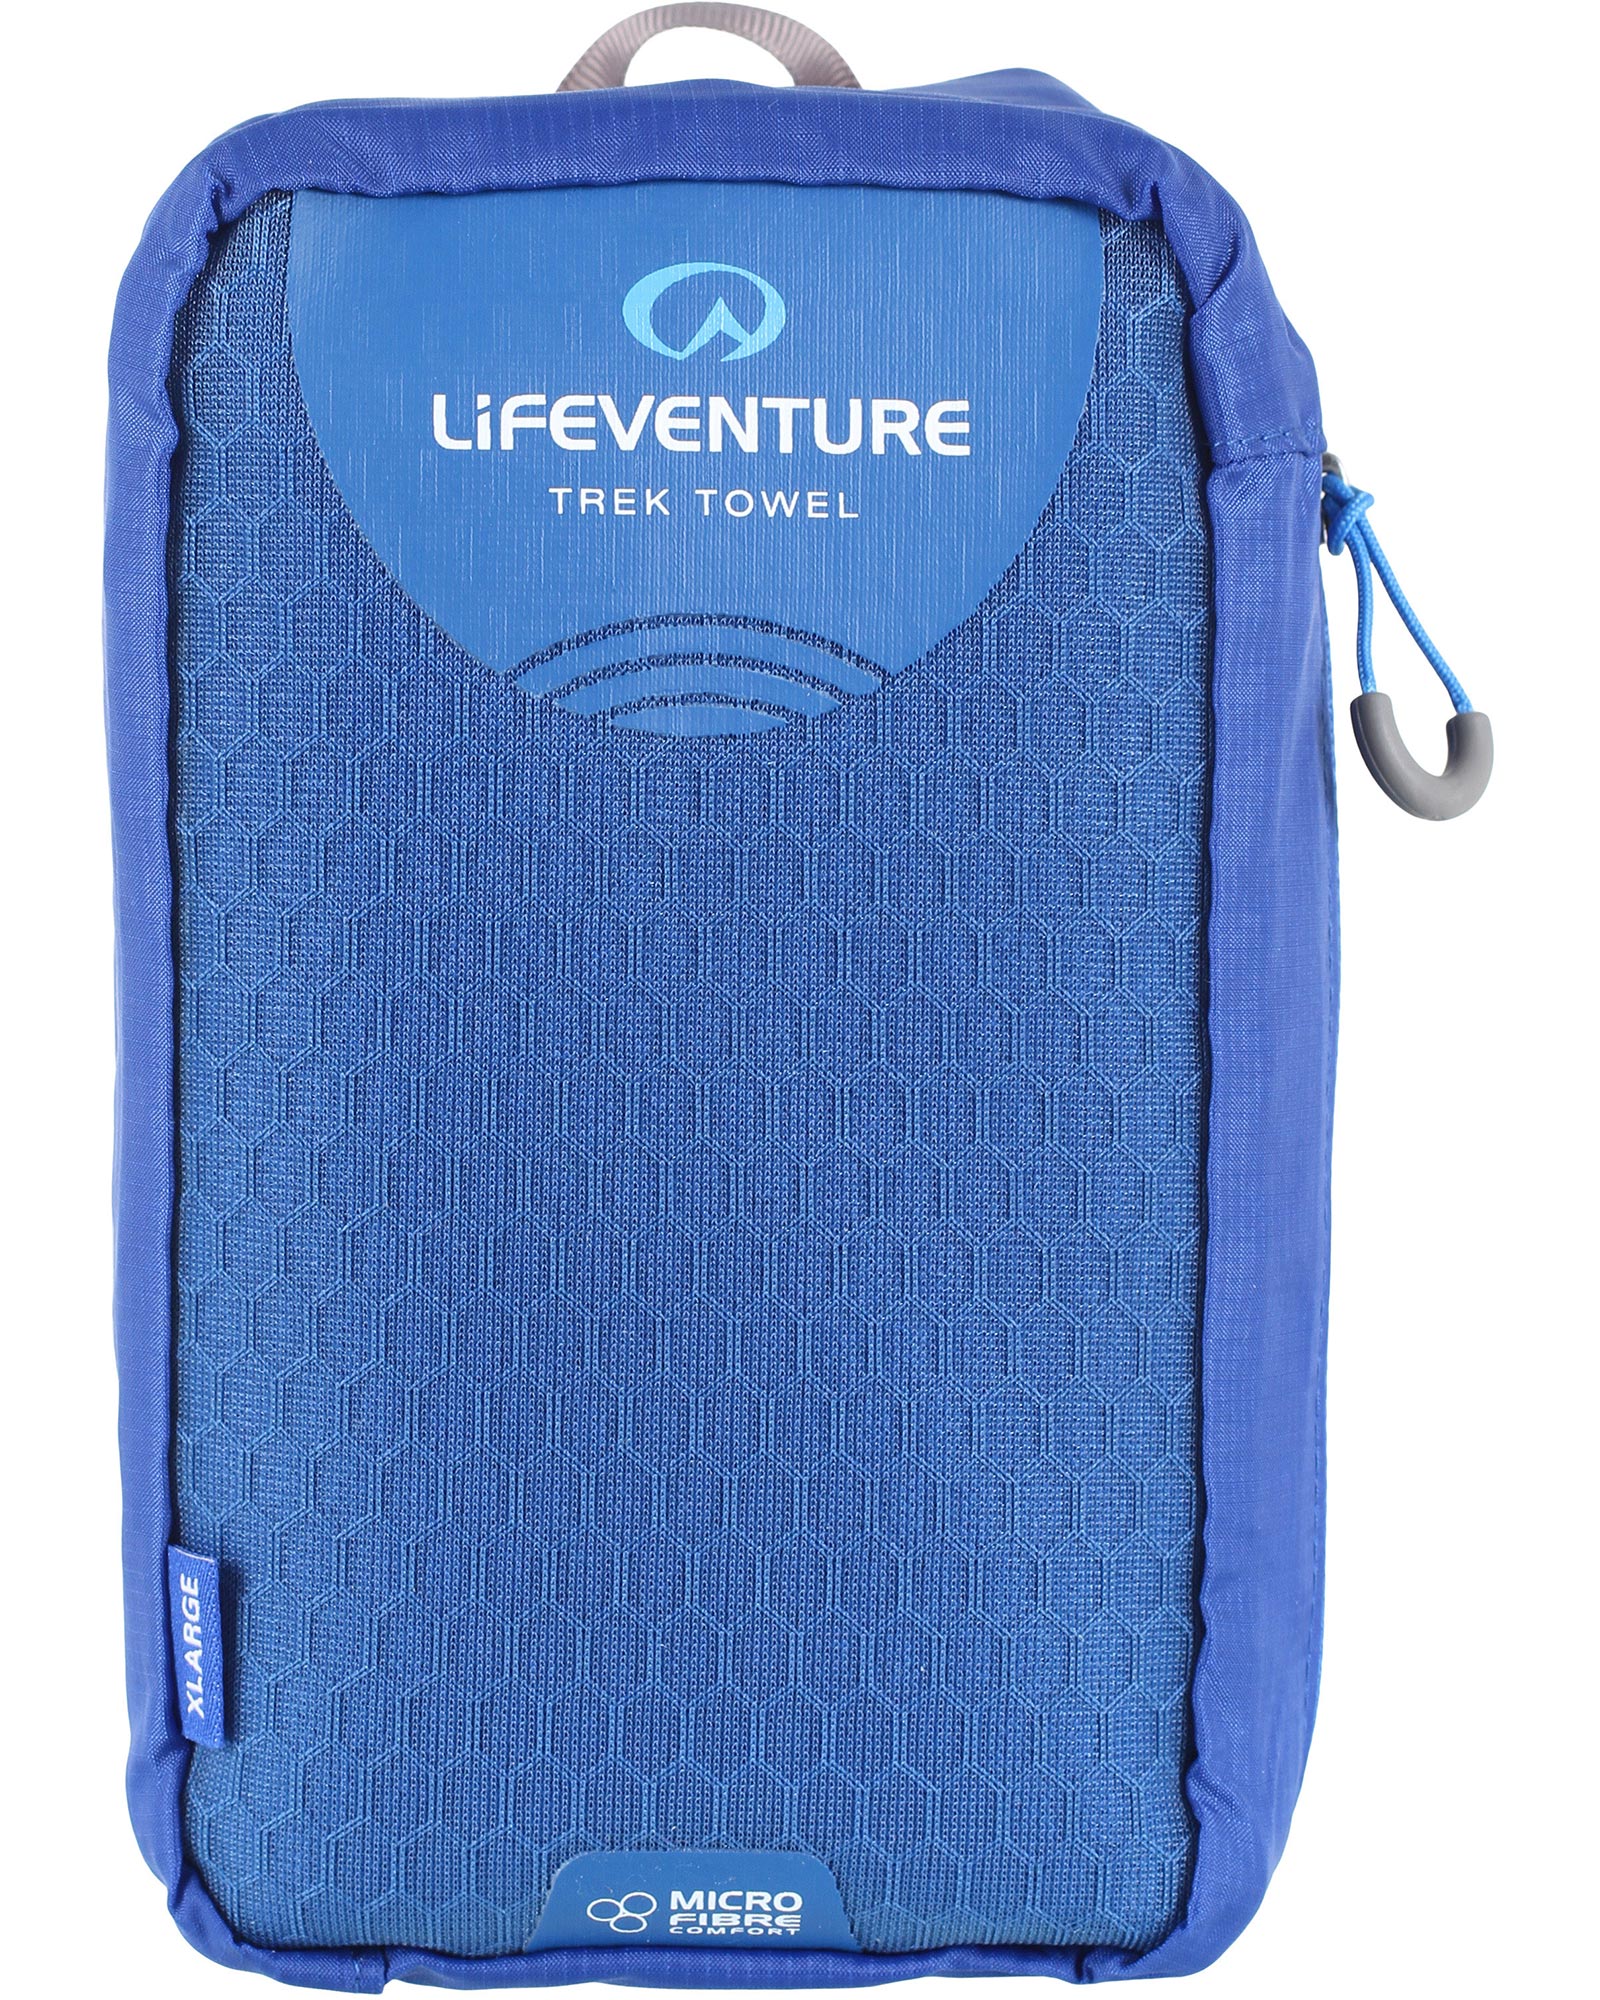 Lifeventure Microfibre Trek Towel - X Large